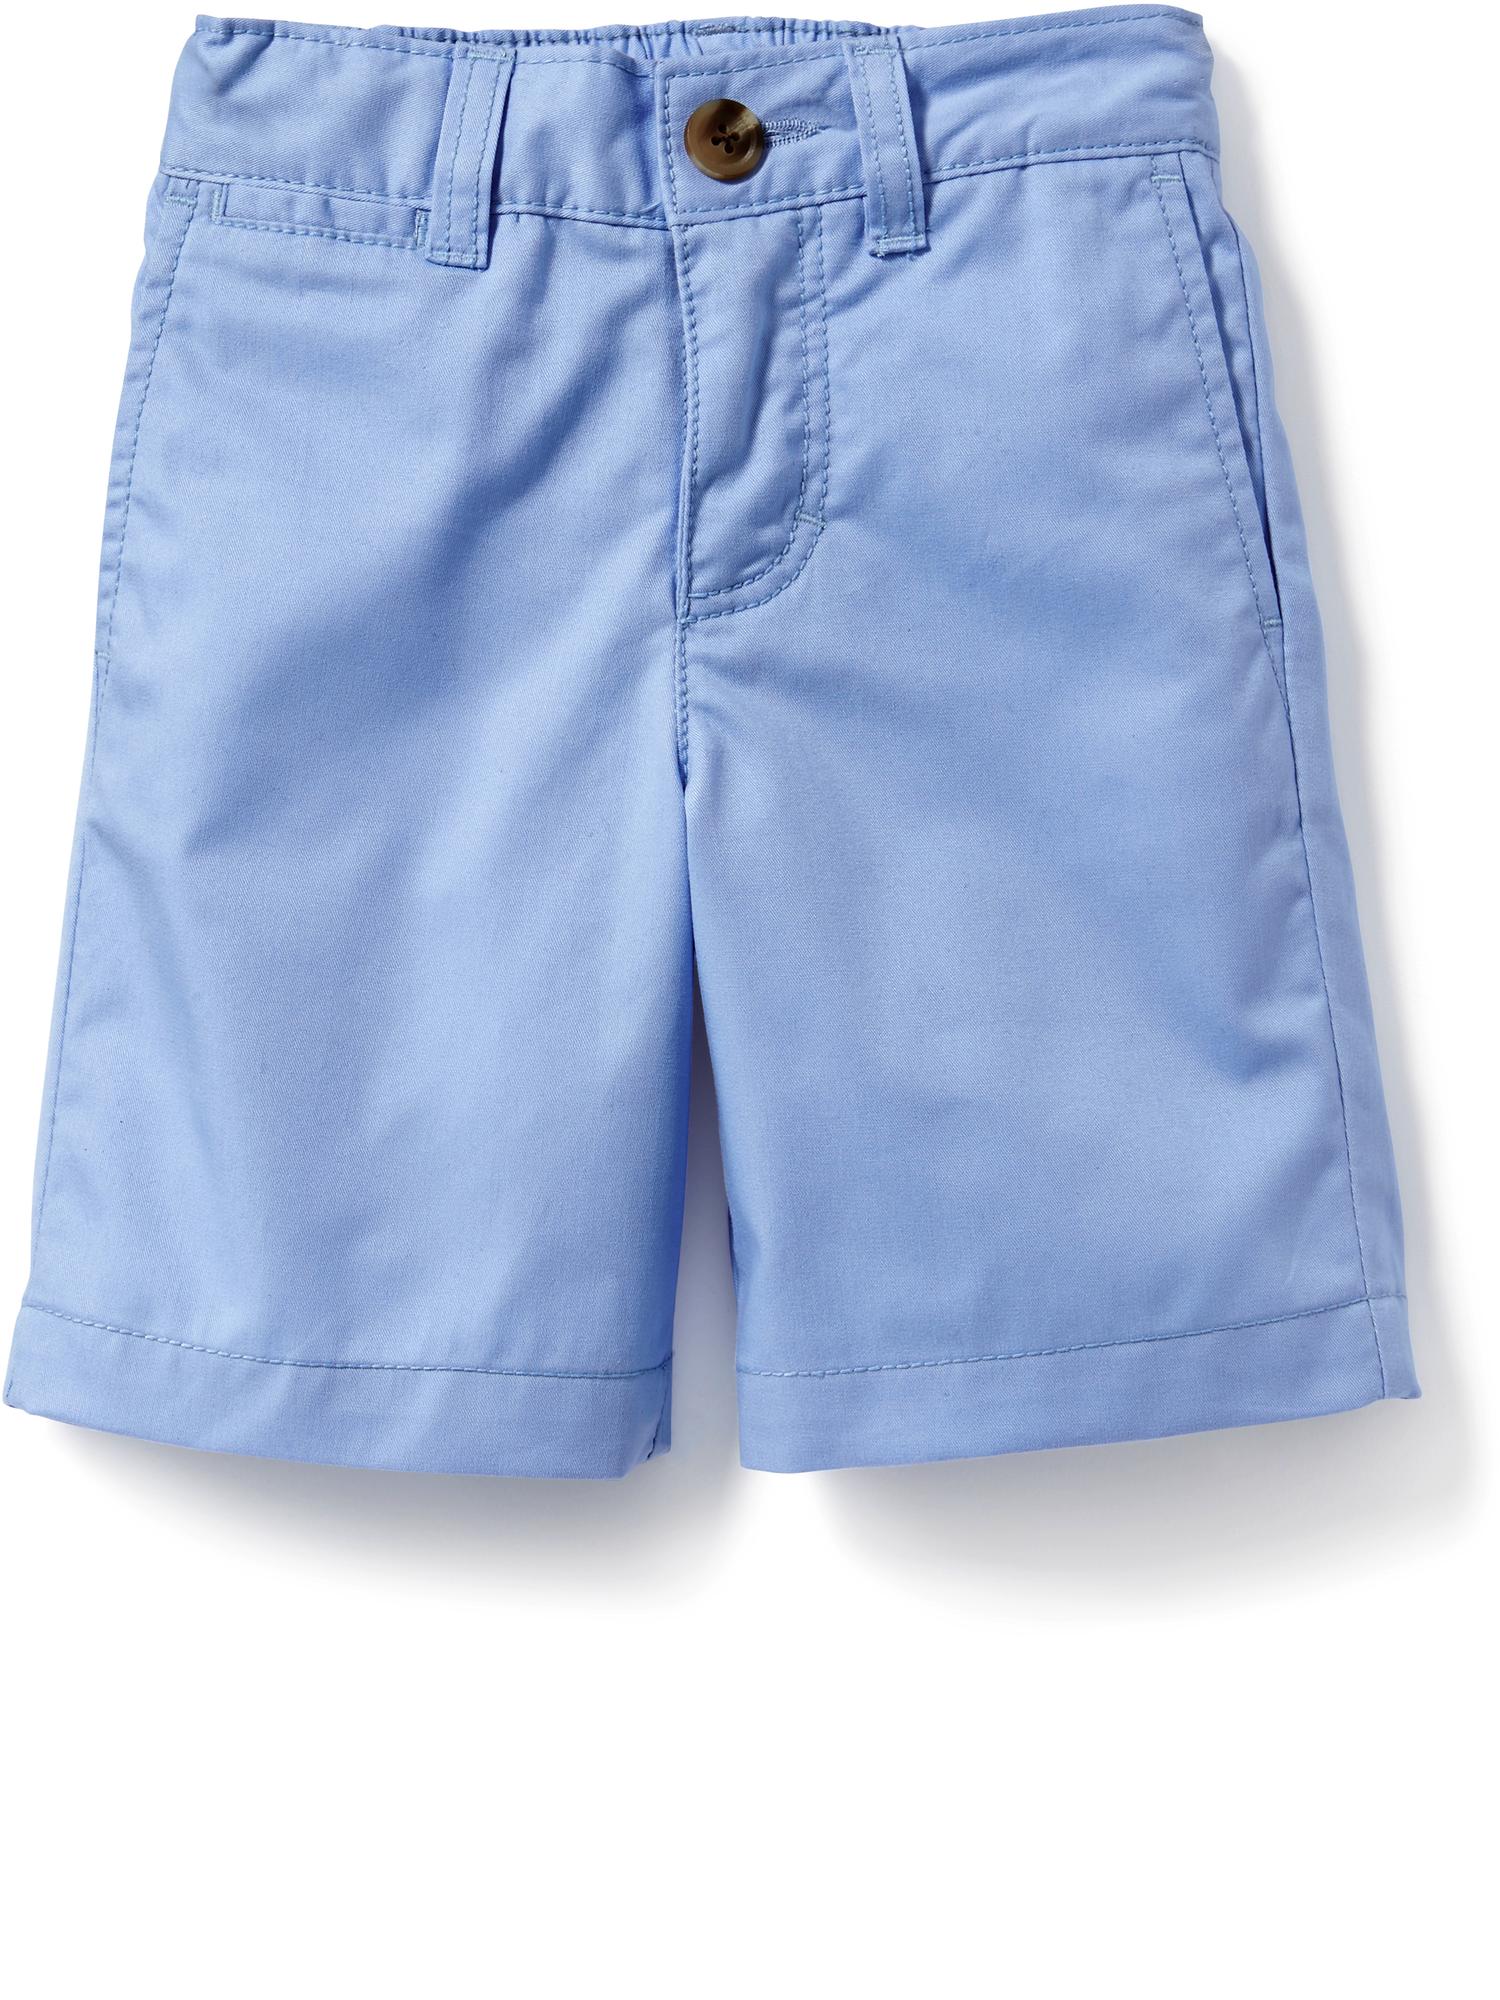 Pop-Color Khaki Shorts for Toddler Boys | Old Navy